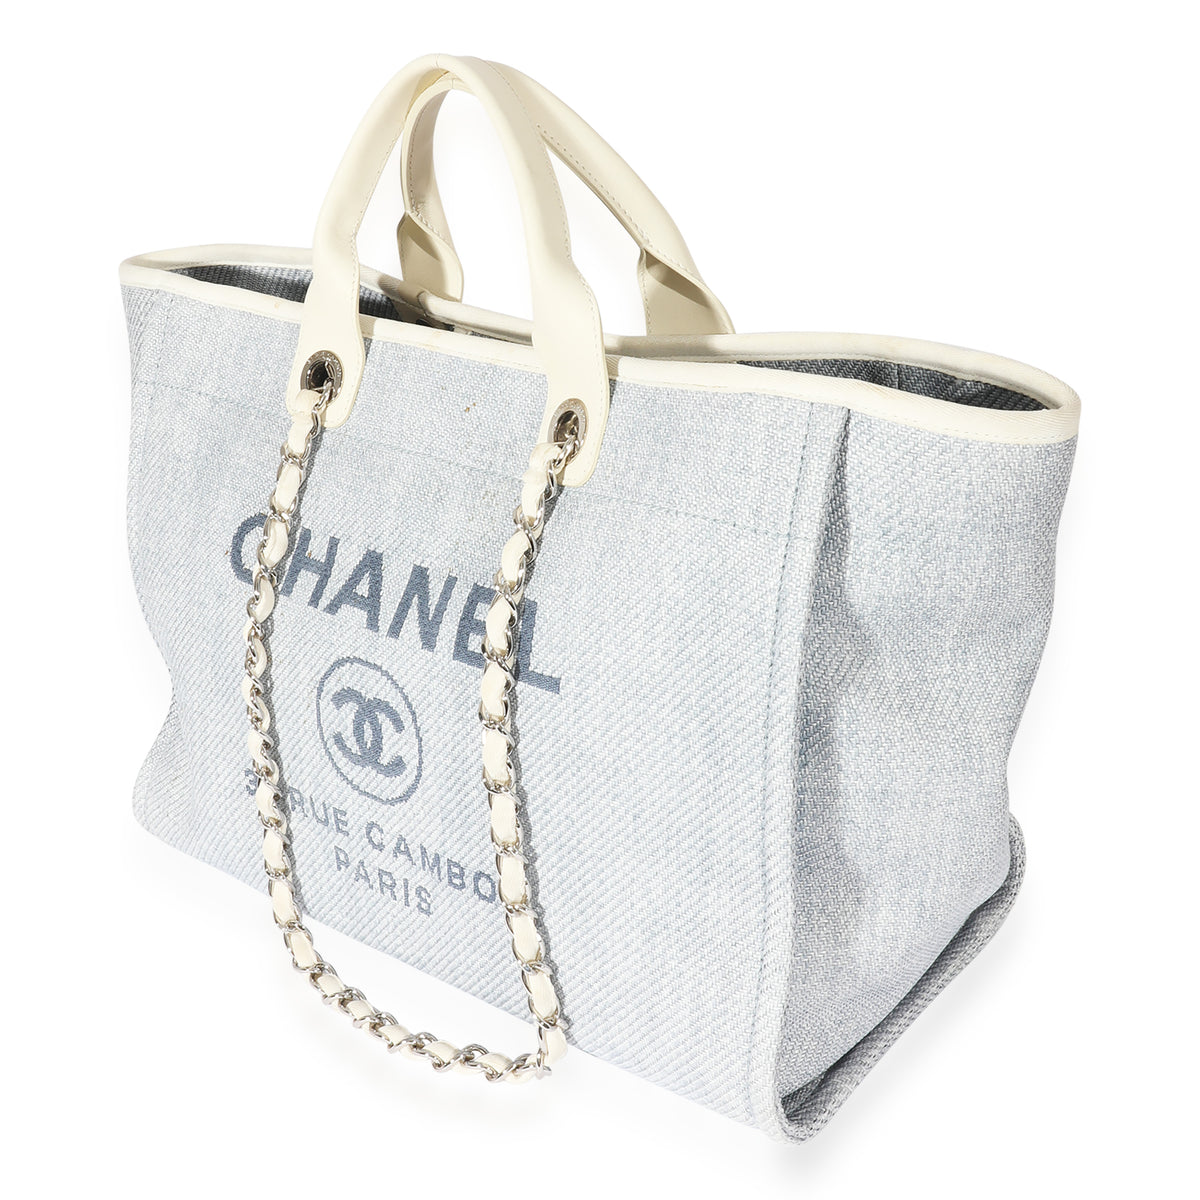  Purse Organizer for Chanel Deauville Tote Bag